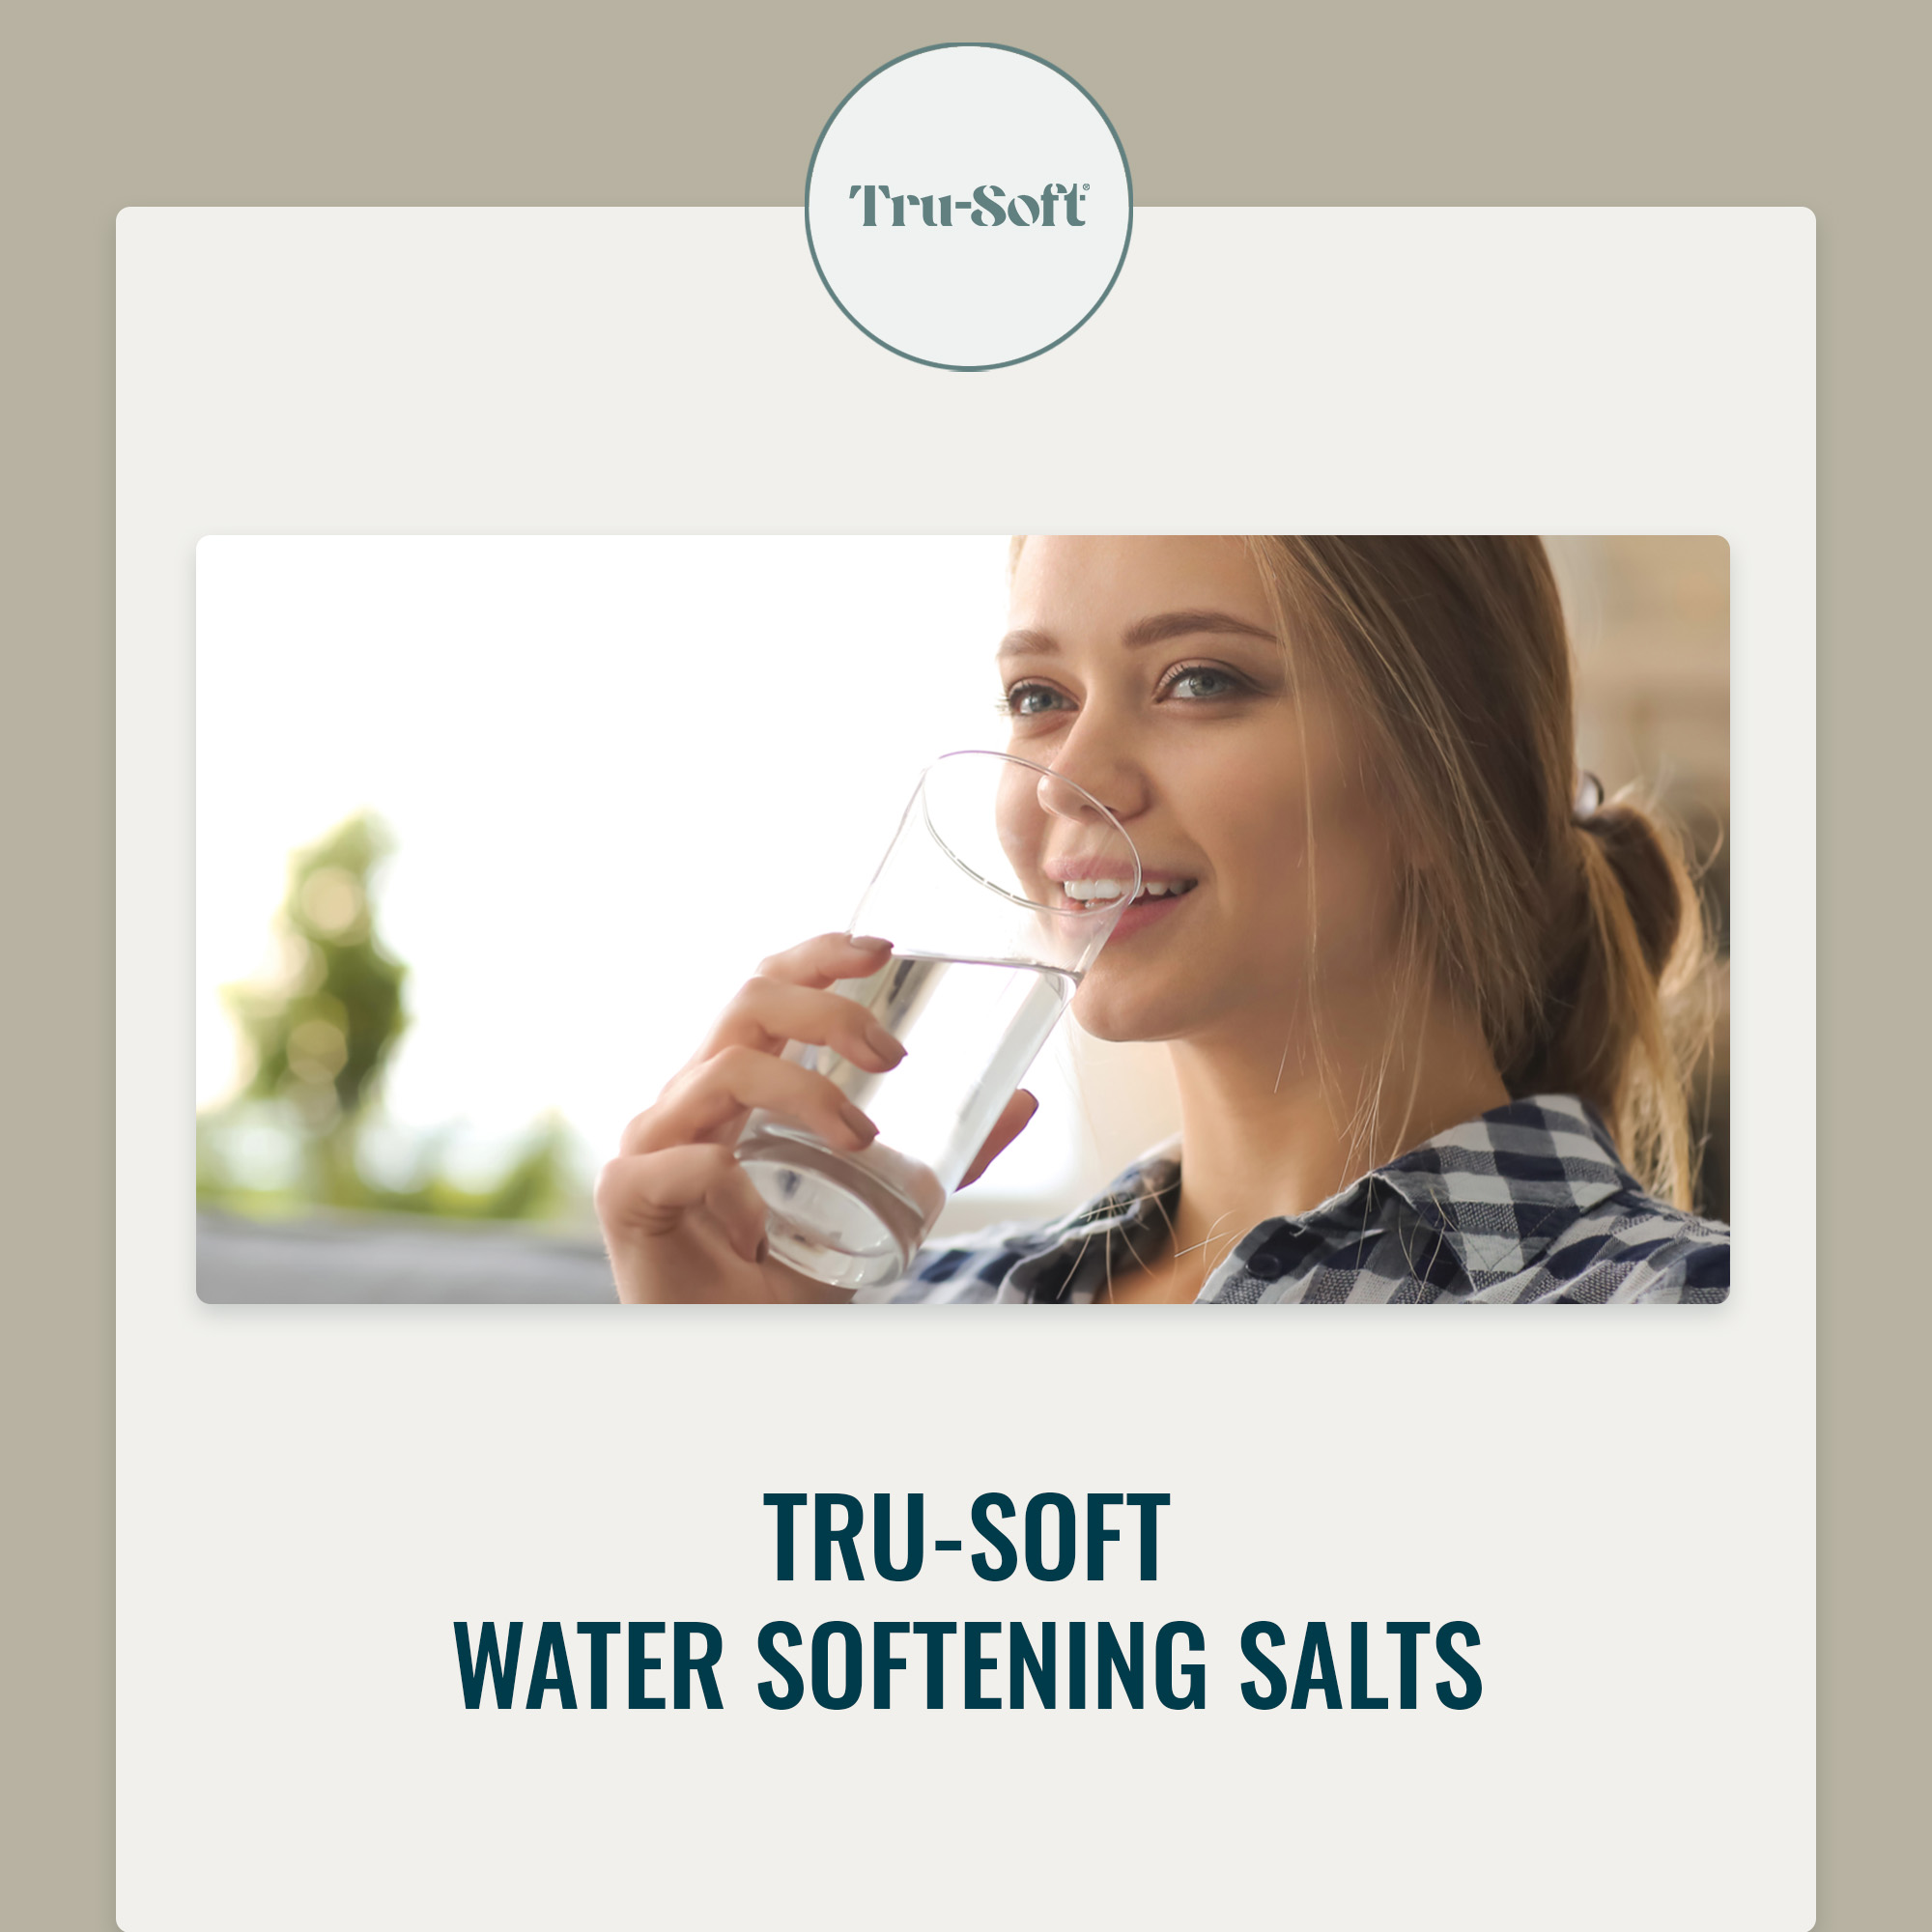 United Salt Corporation-True Soft Water Softening Salts